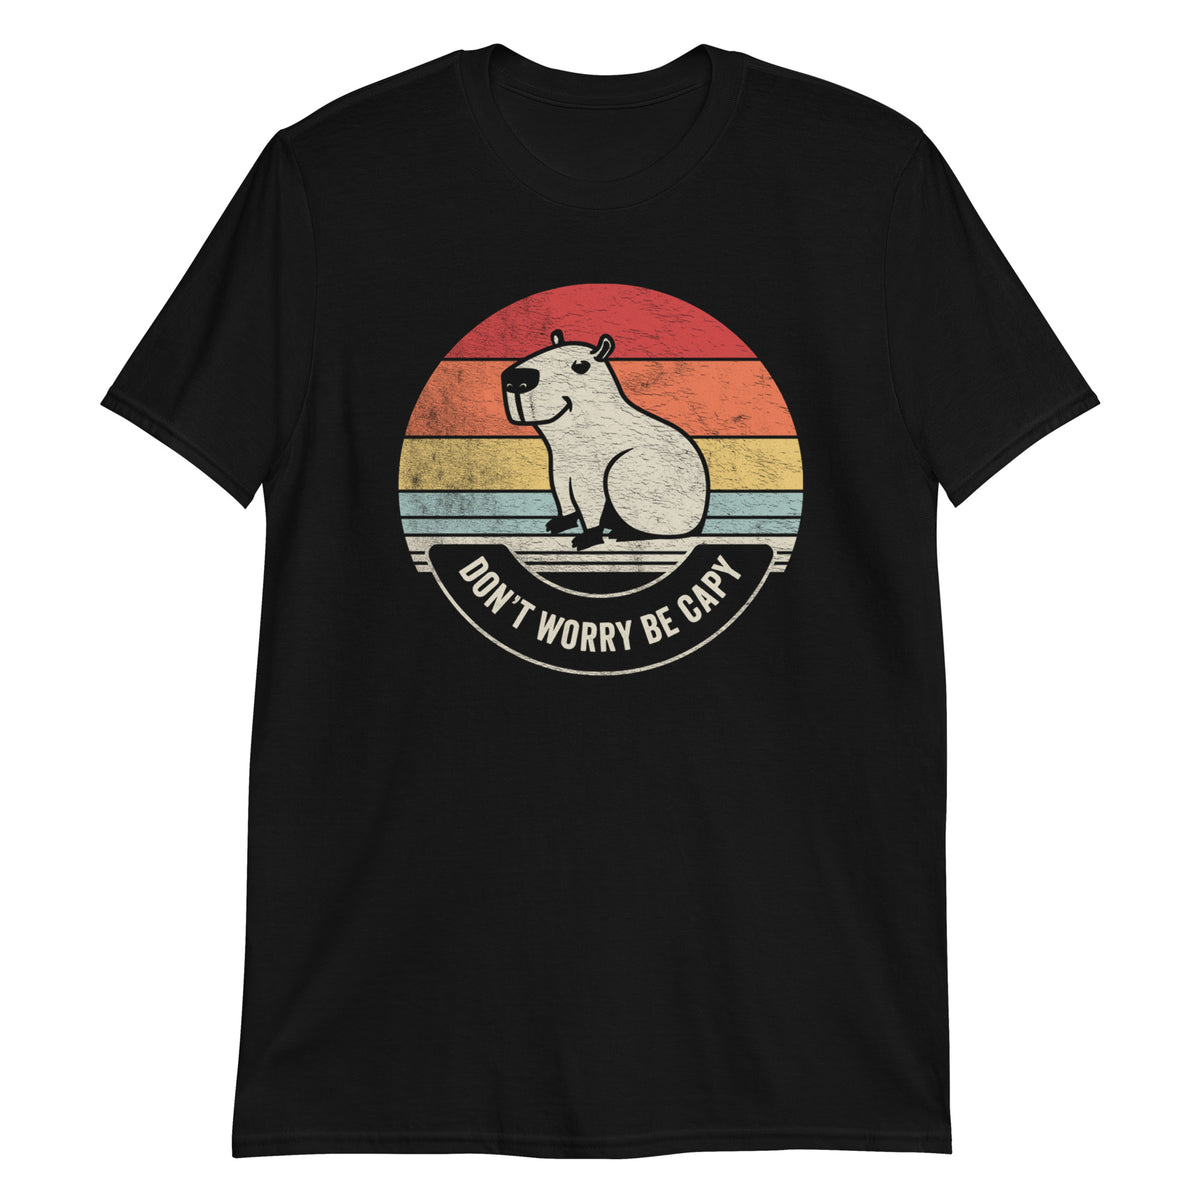 Don't Worry Be Cappy Vintage Retro Capybara Funny T-Shirt